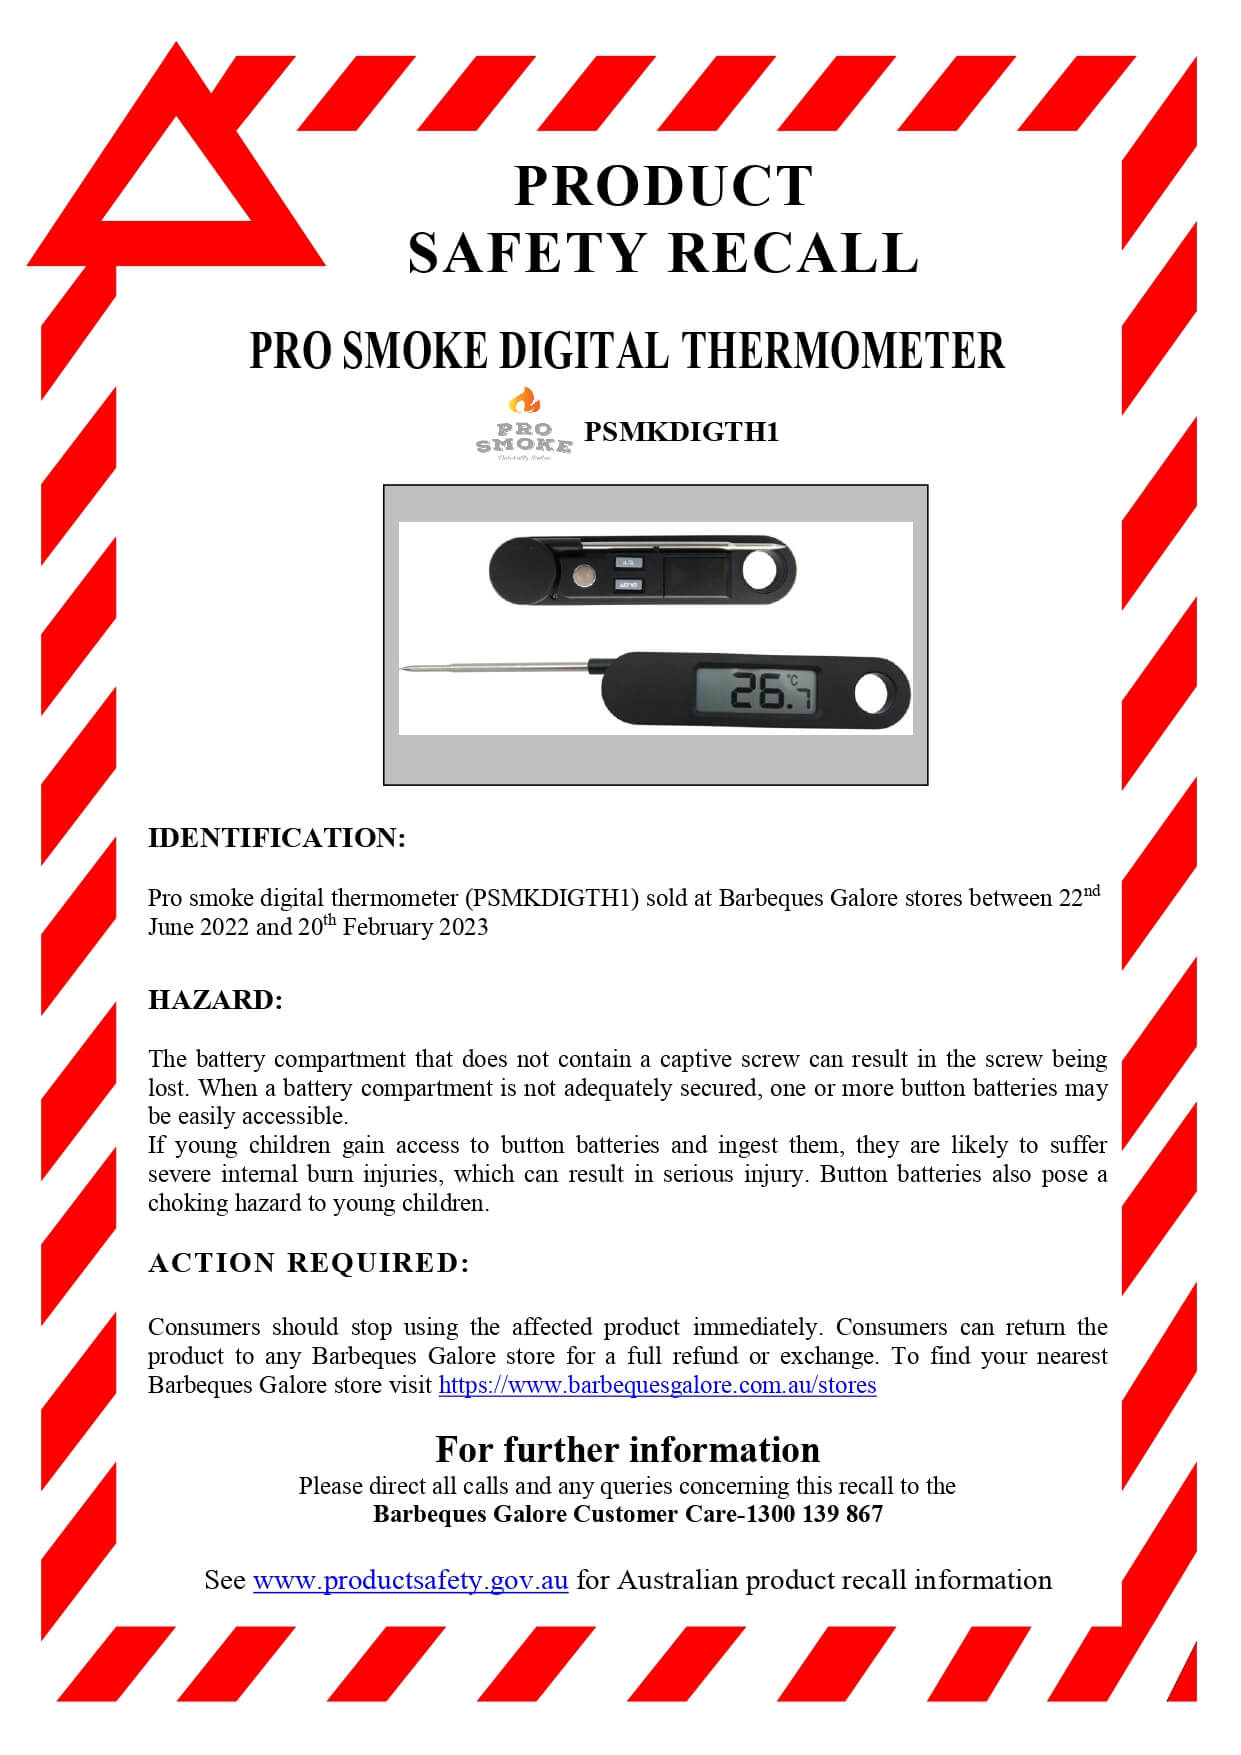 Pro Smoke Digital Thermometer Recall